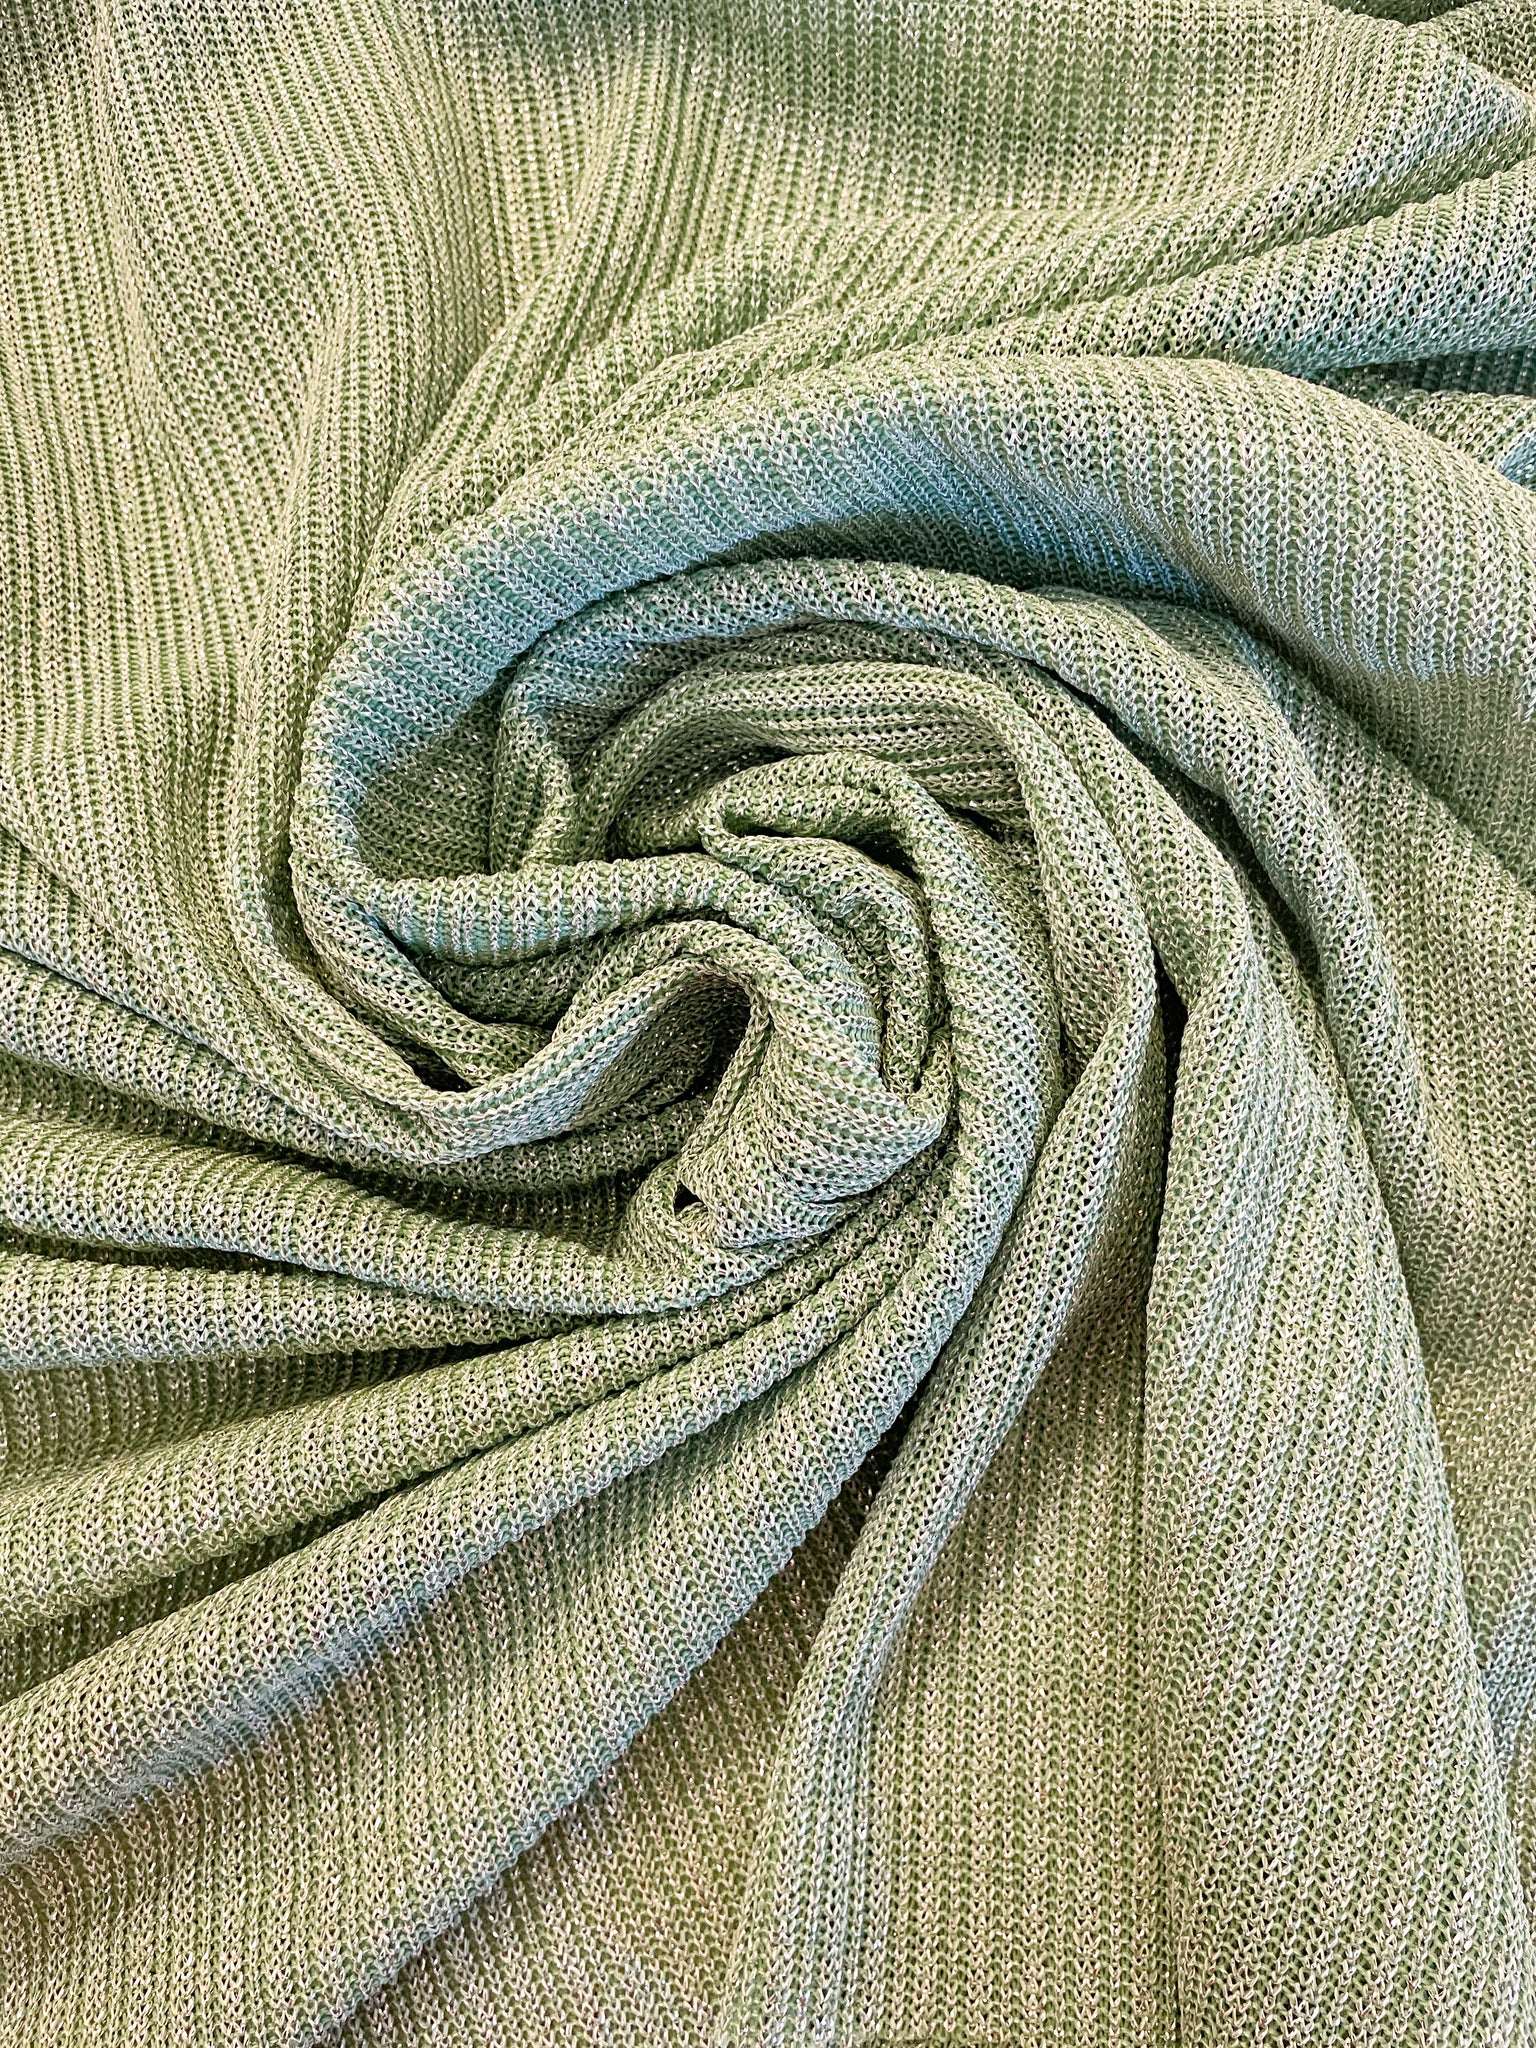 SALE 1 1/2 YD Nylon Knit - Mint Green with Silver Lurex